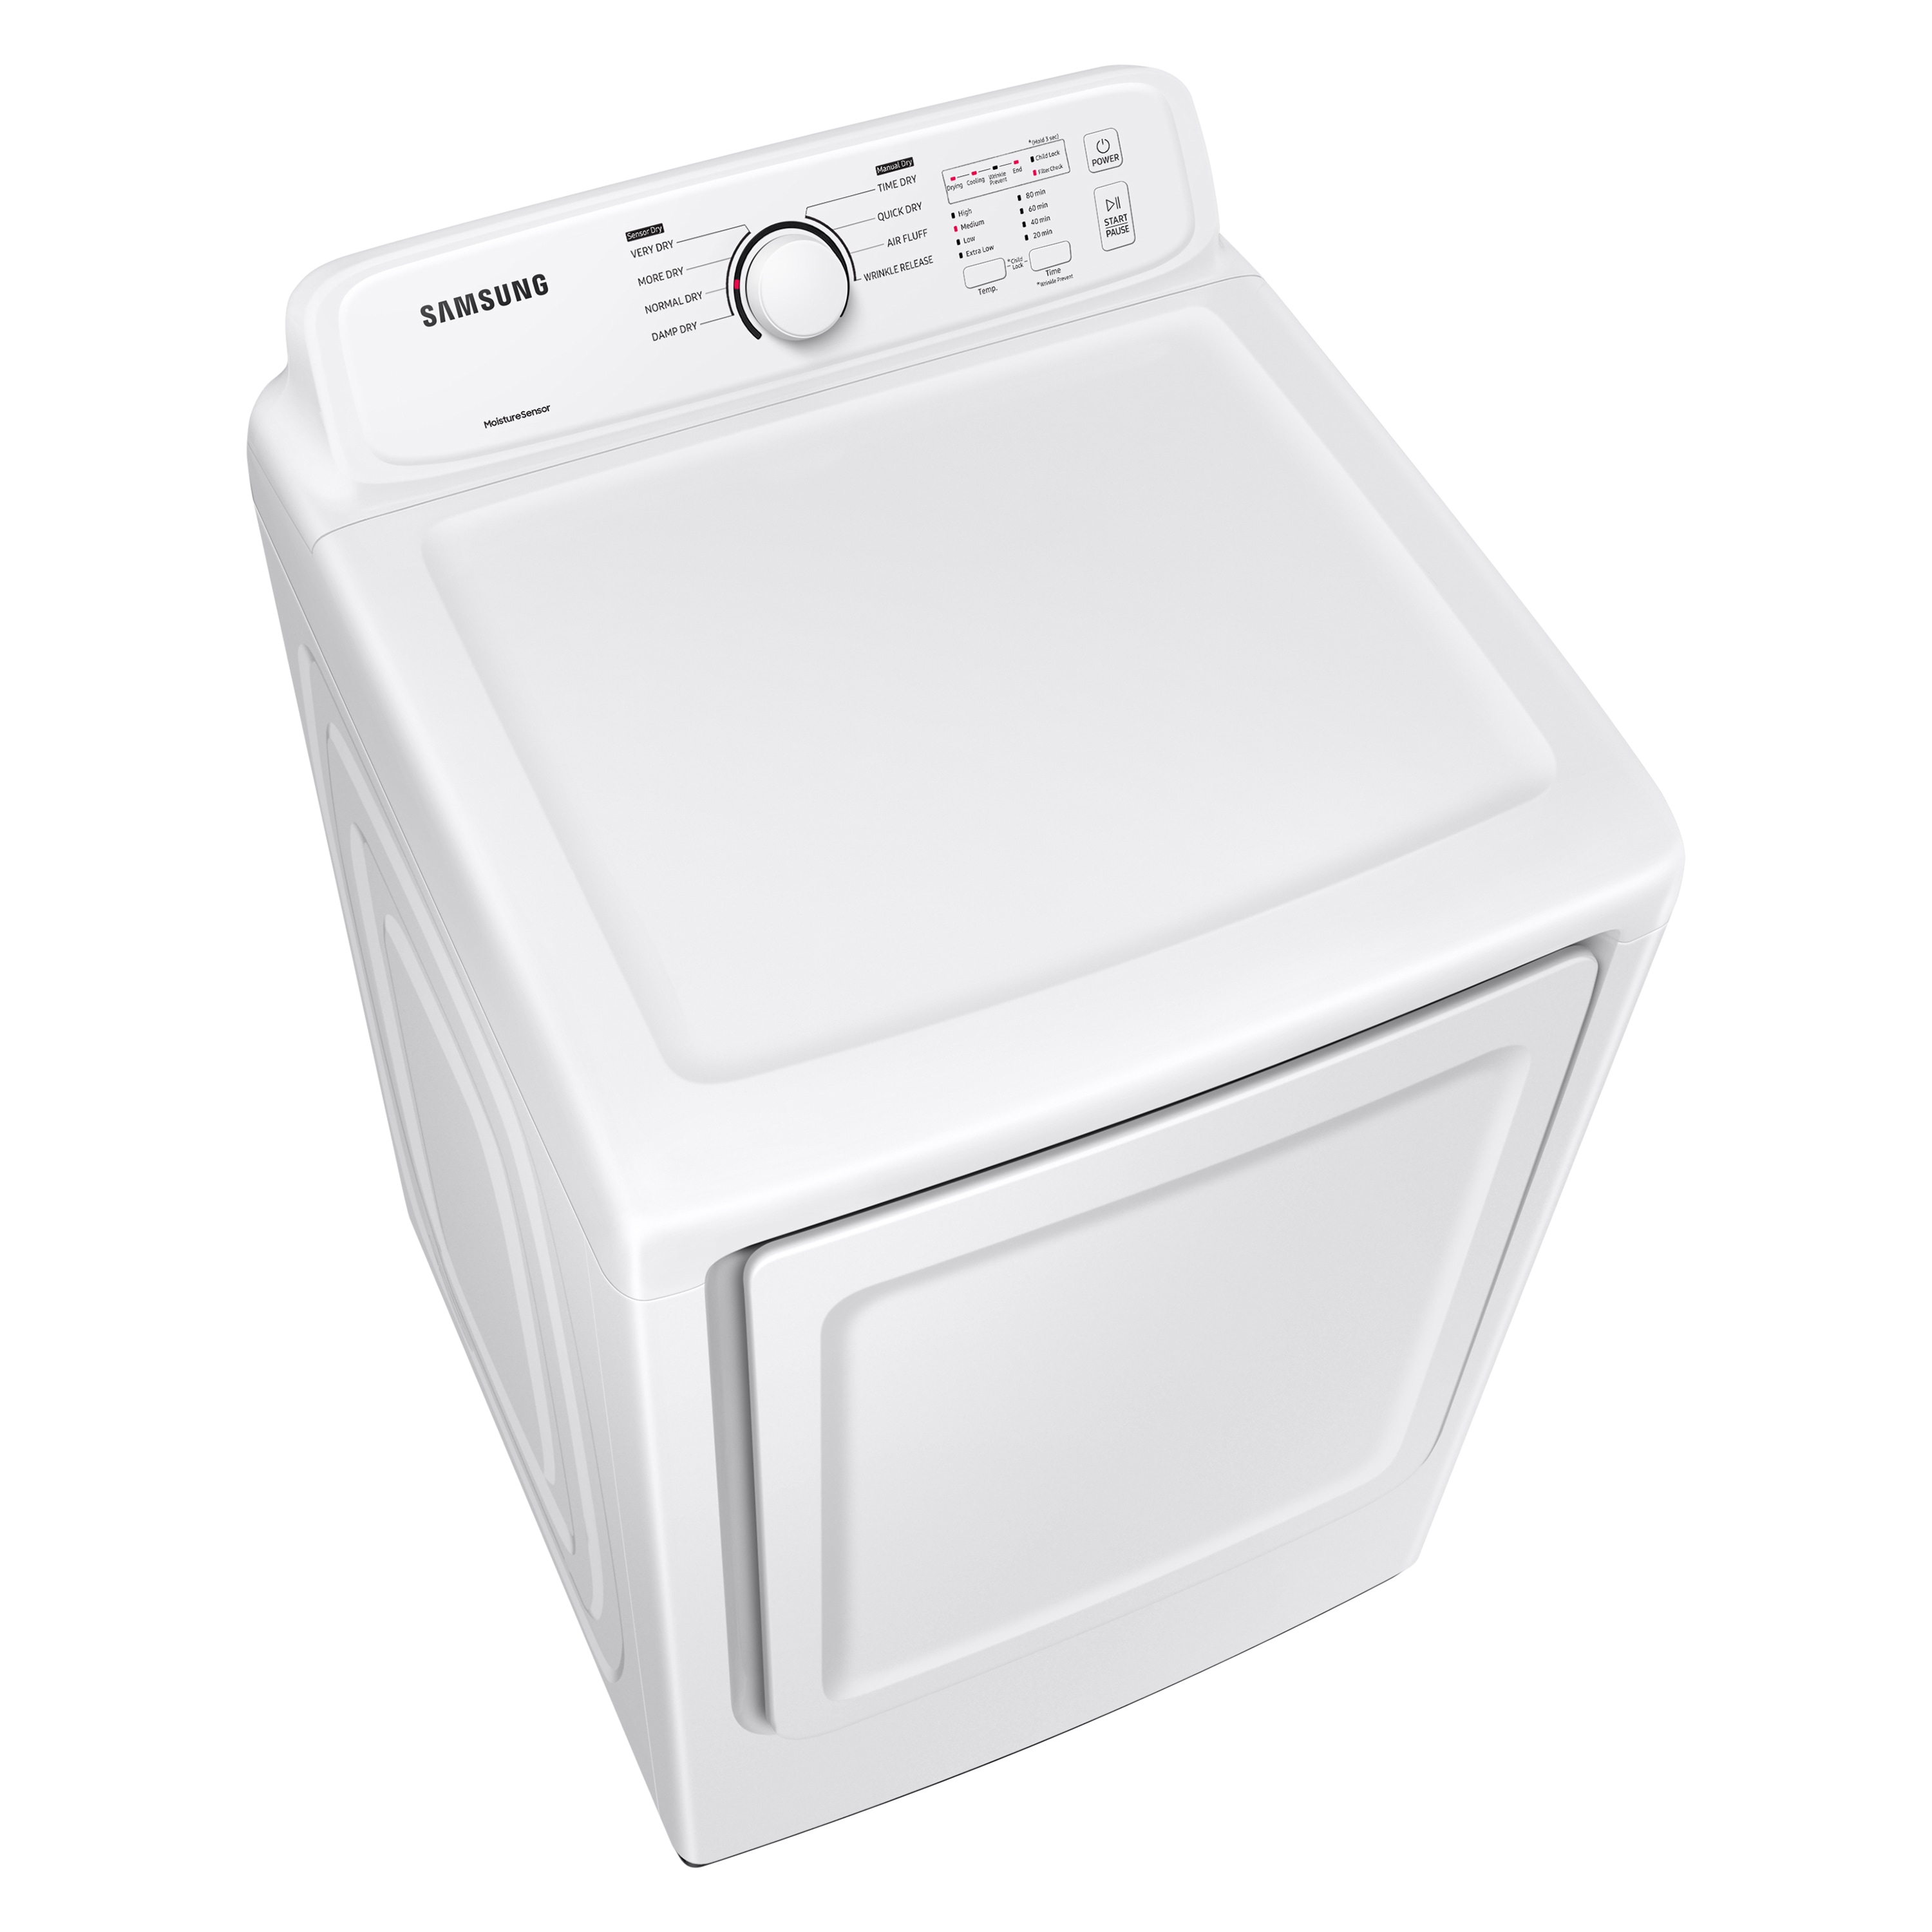 WTTTTW Body Dryer, Full Body Dryer with 2 Gears Adjustment, Portable Body  Blow Dryer for Bathroom, Quick Air Drying, Gravity Sensing, for